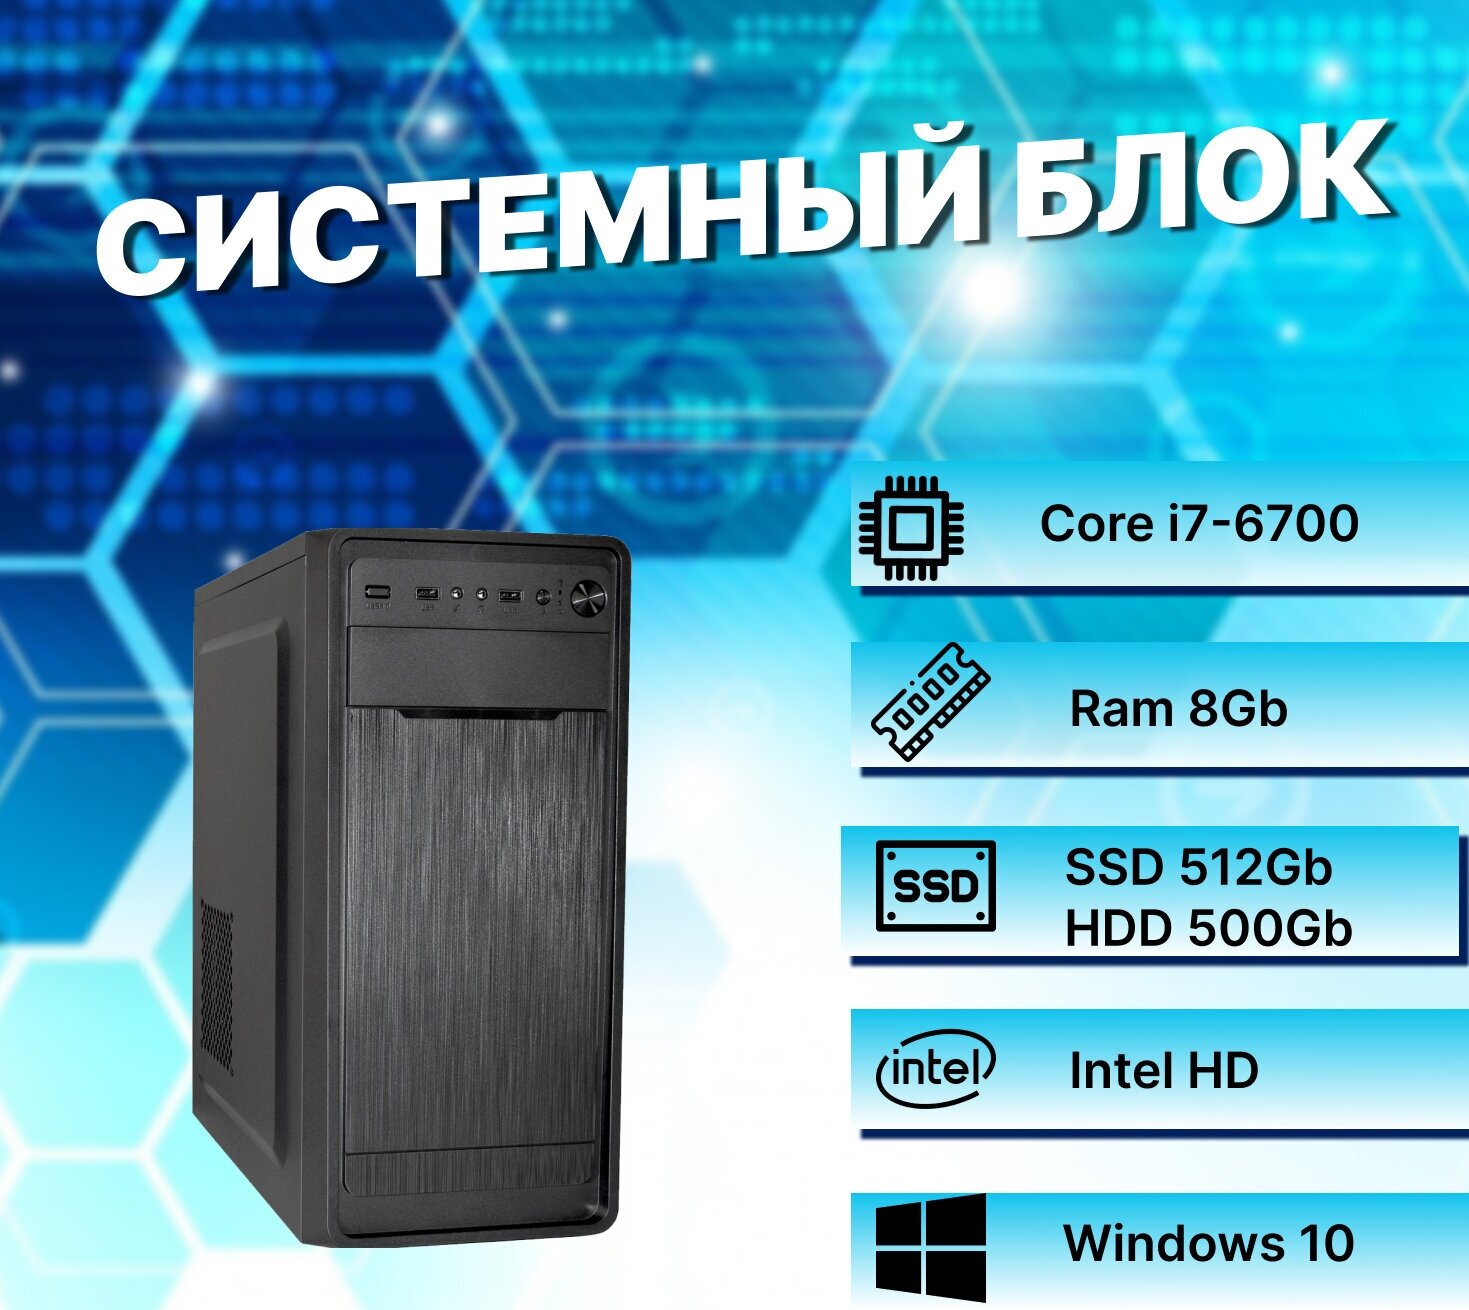 Системный блок Intel Core I7-6700 (3.4ГГц)/ RAM 8Gb/ SSD 512Gb/ HDD 500Gb/ Intel HD/ Windows 10 Pro